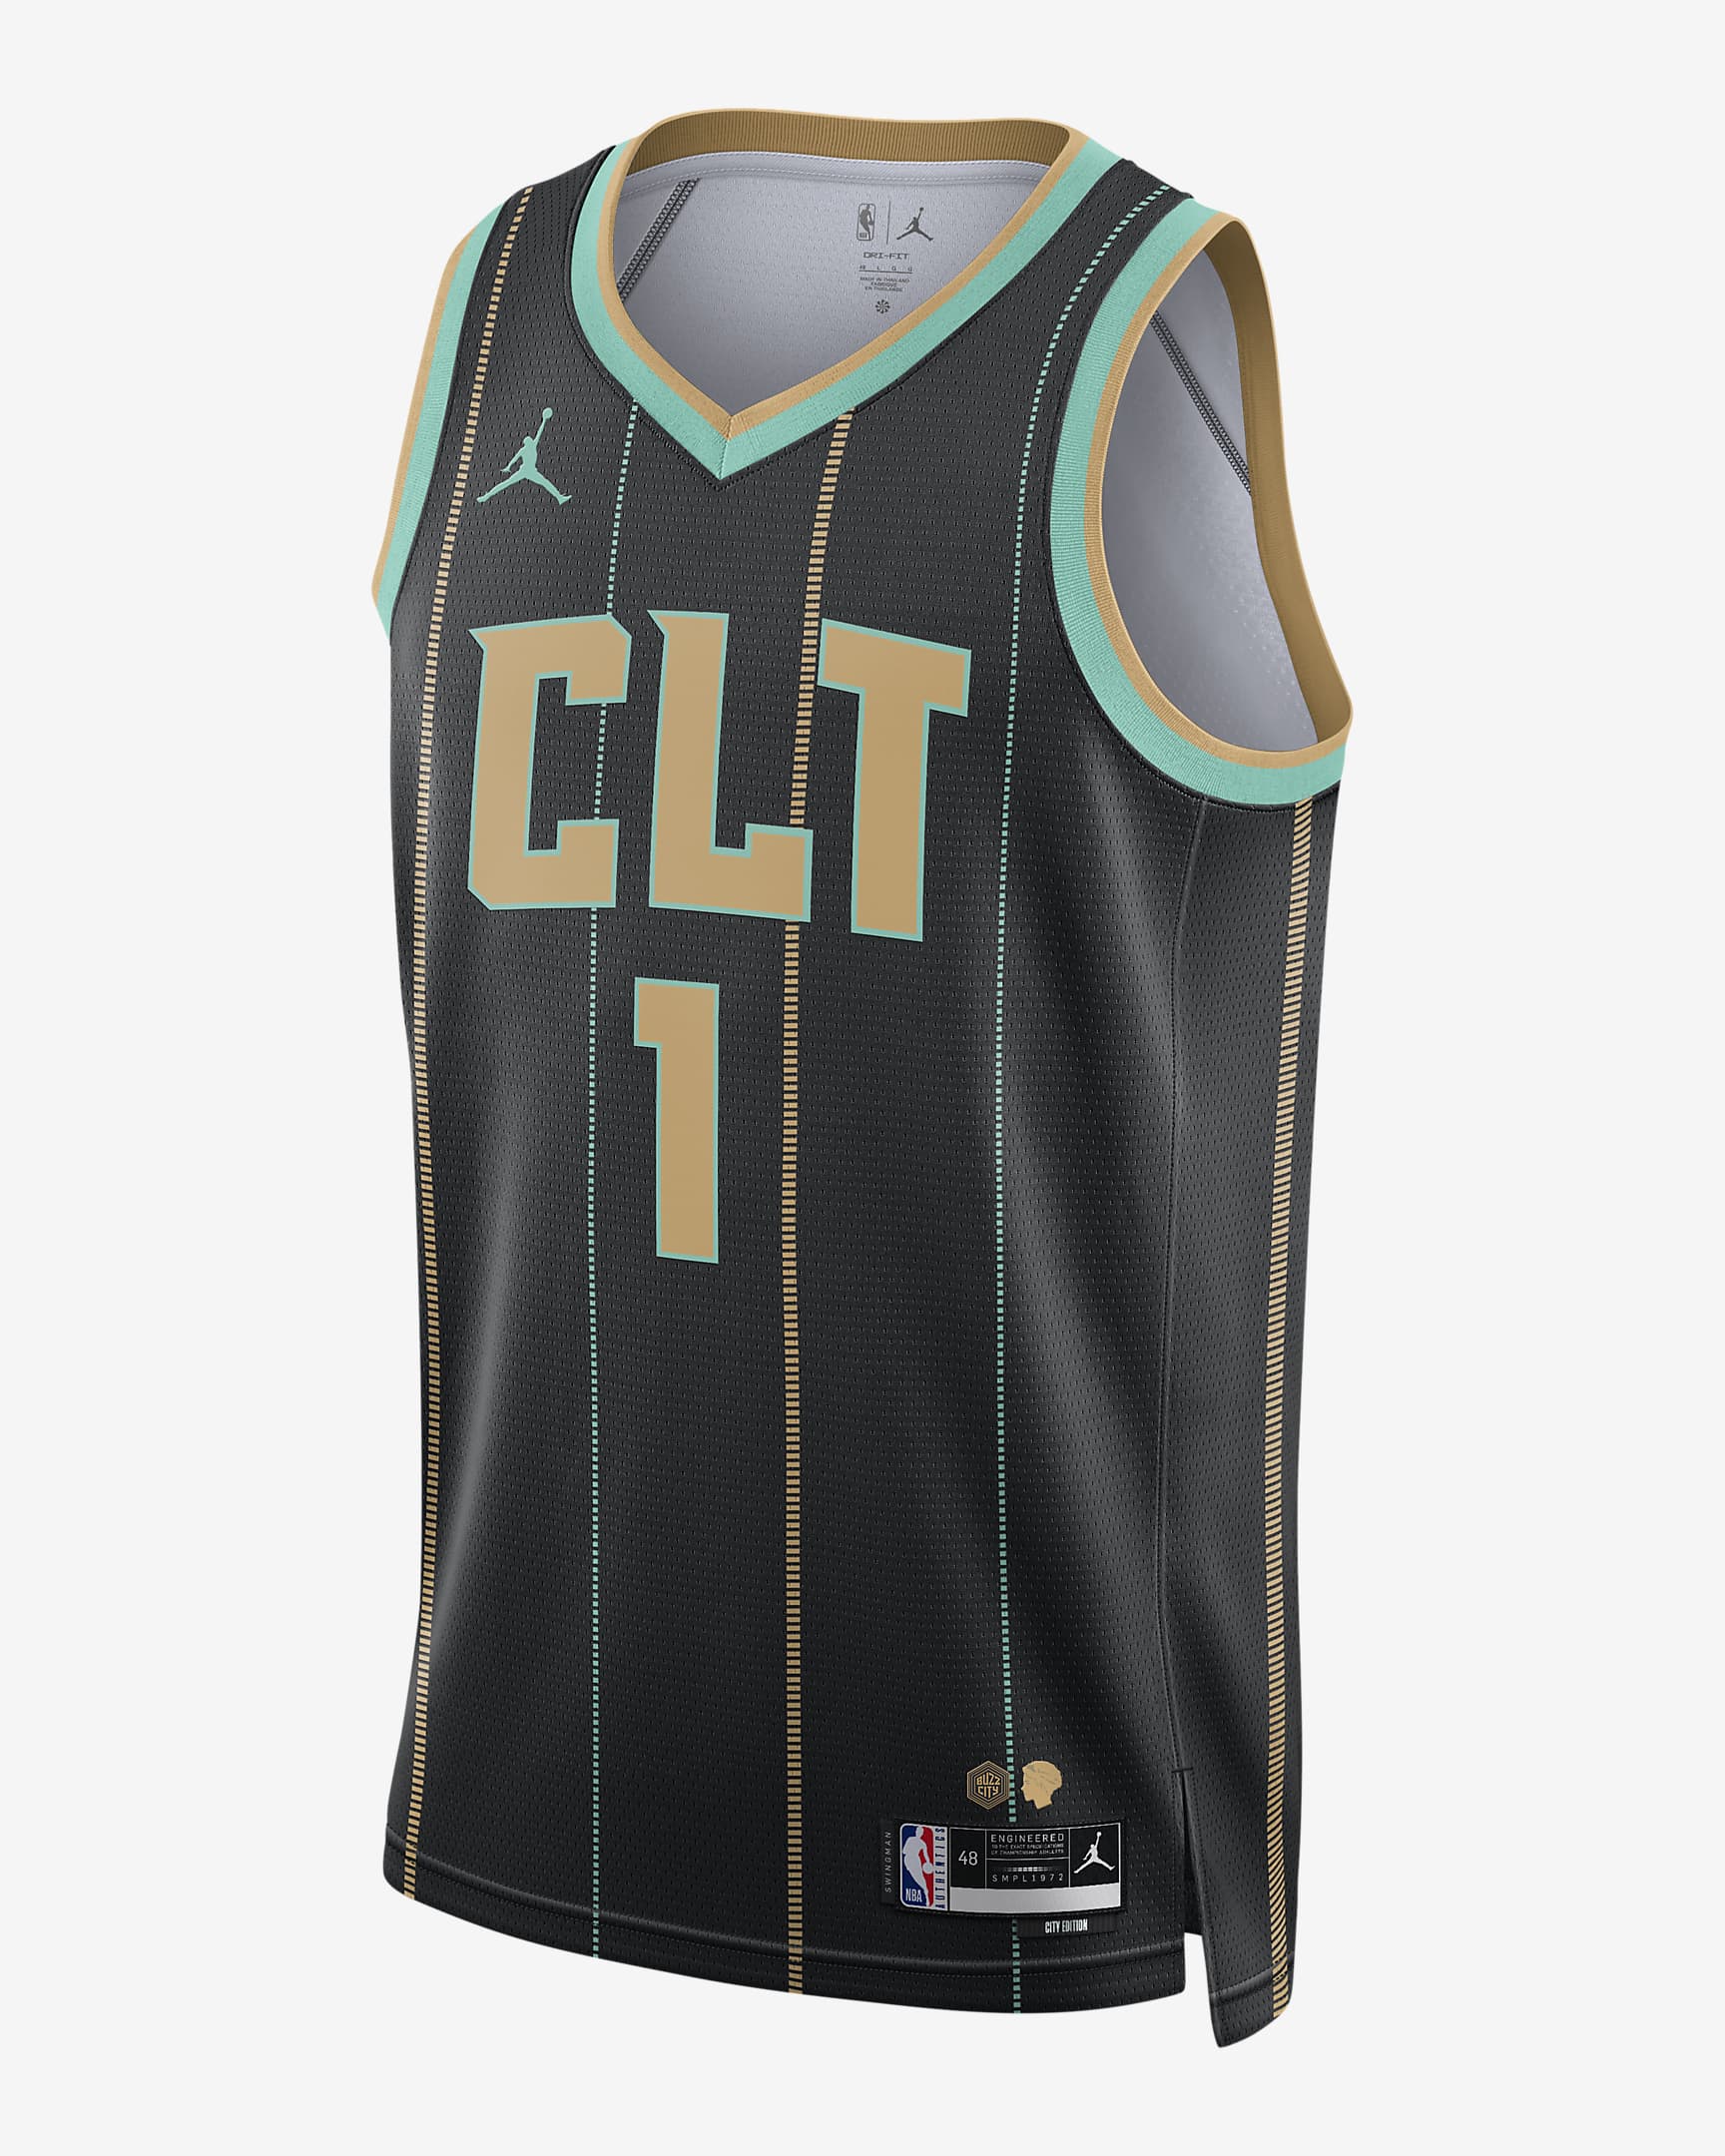 Charlotte Hornets Size XL NBA Jerseys for sale